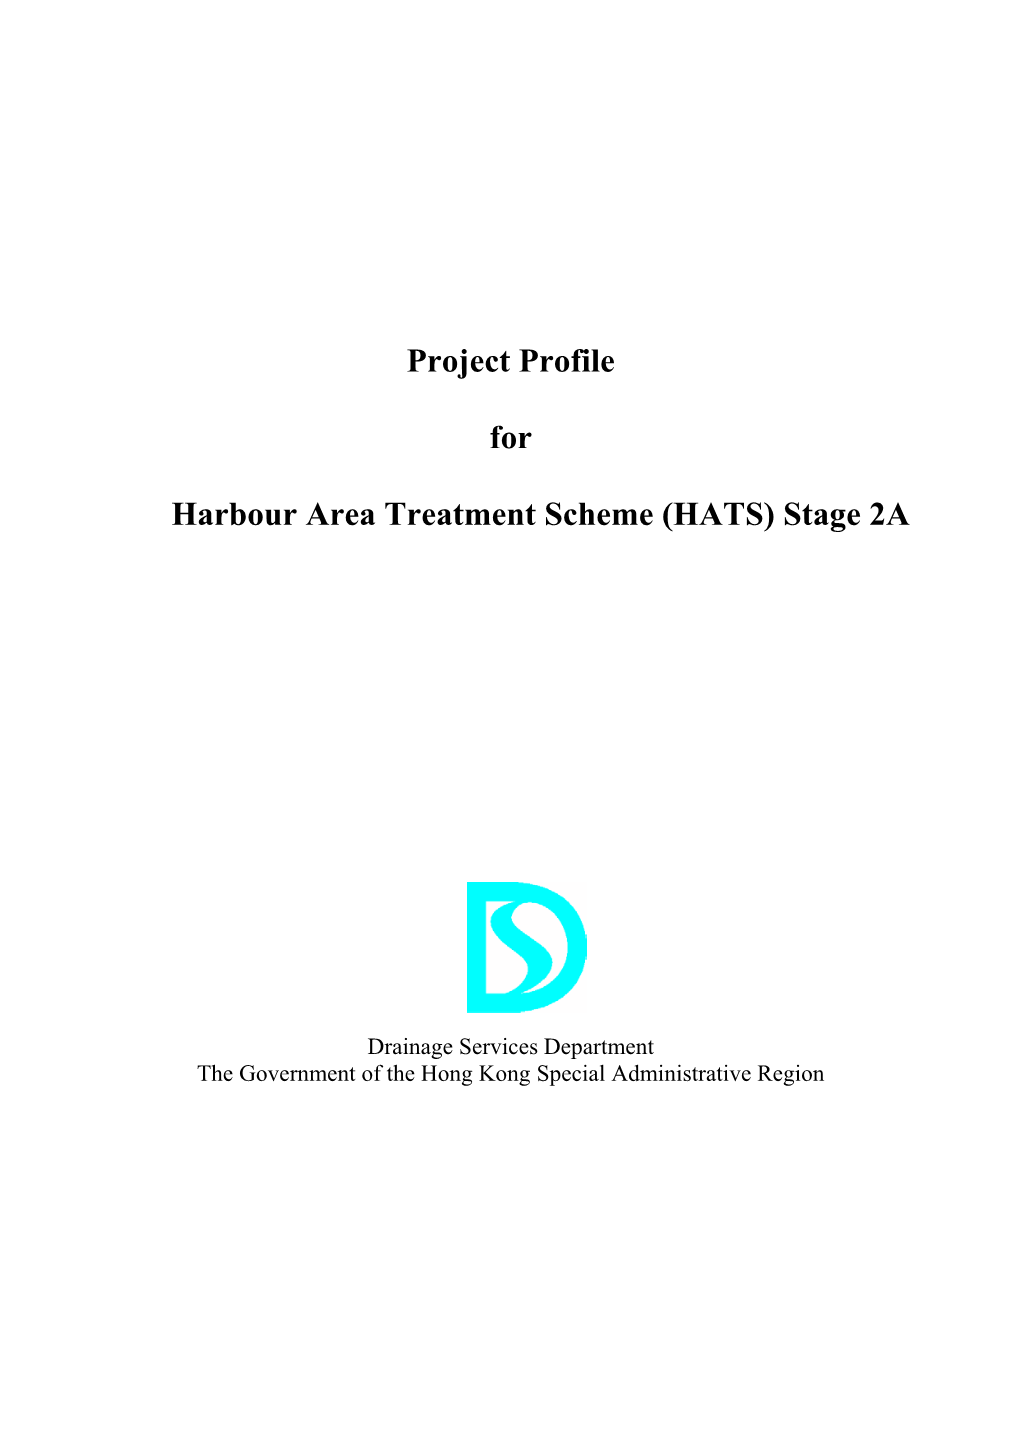 Project Profile for Harbour Area Treatment Scheme (HATS) Stage 2A